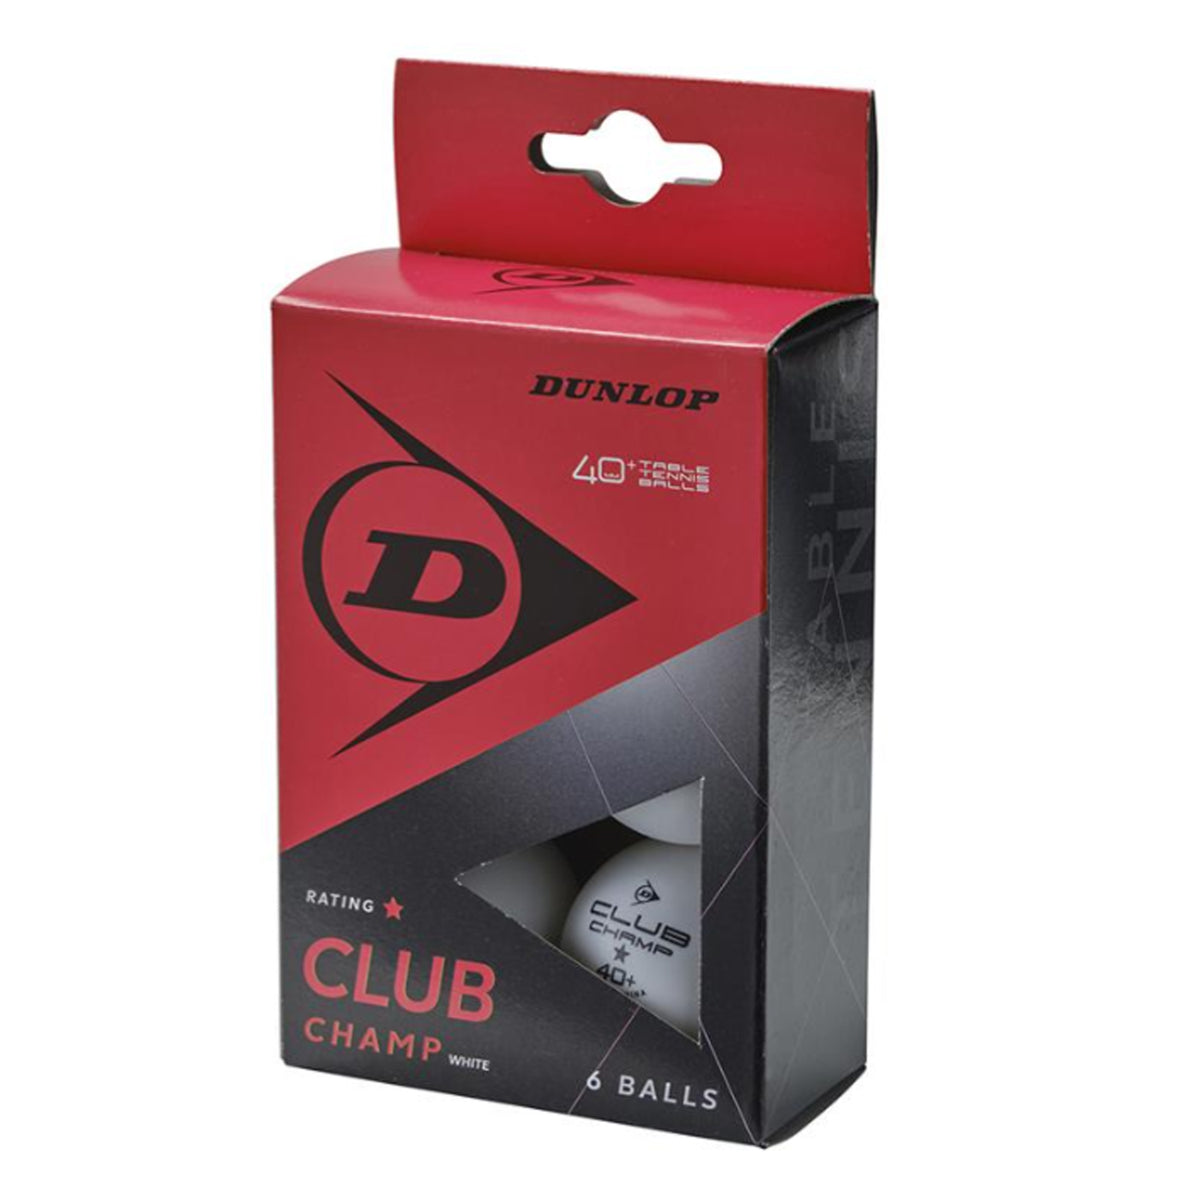 Dunlop Club Champ Table Tennis Balls: White - Box of 6